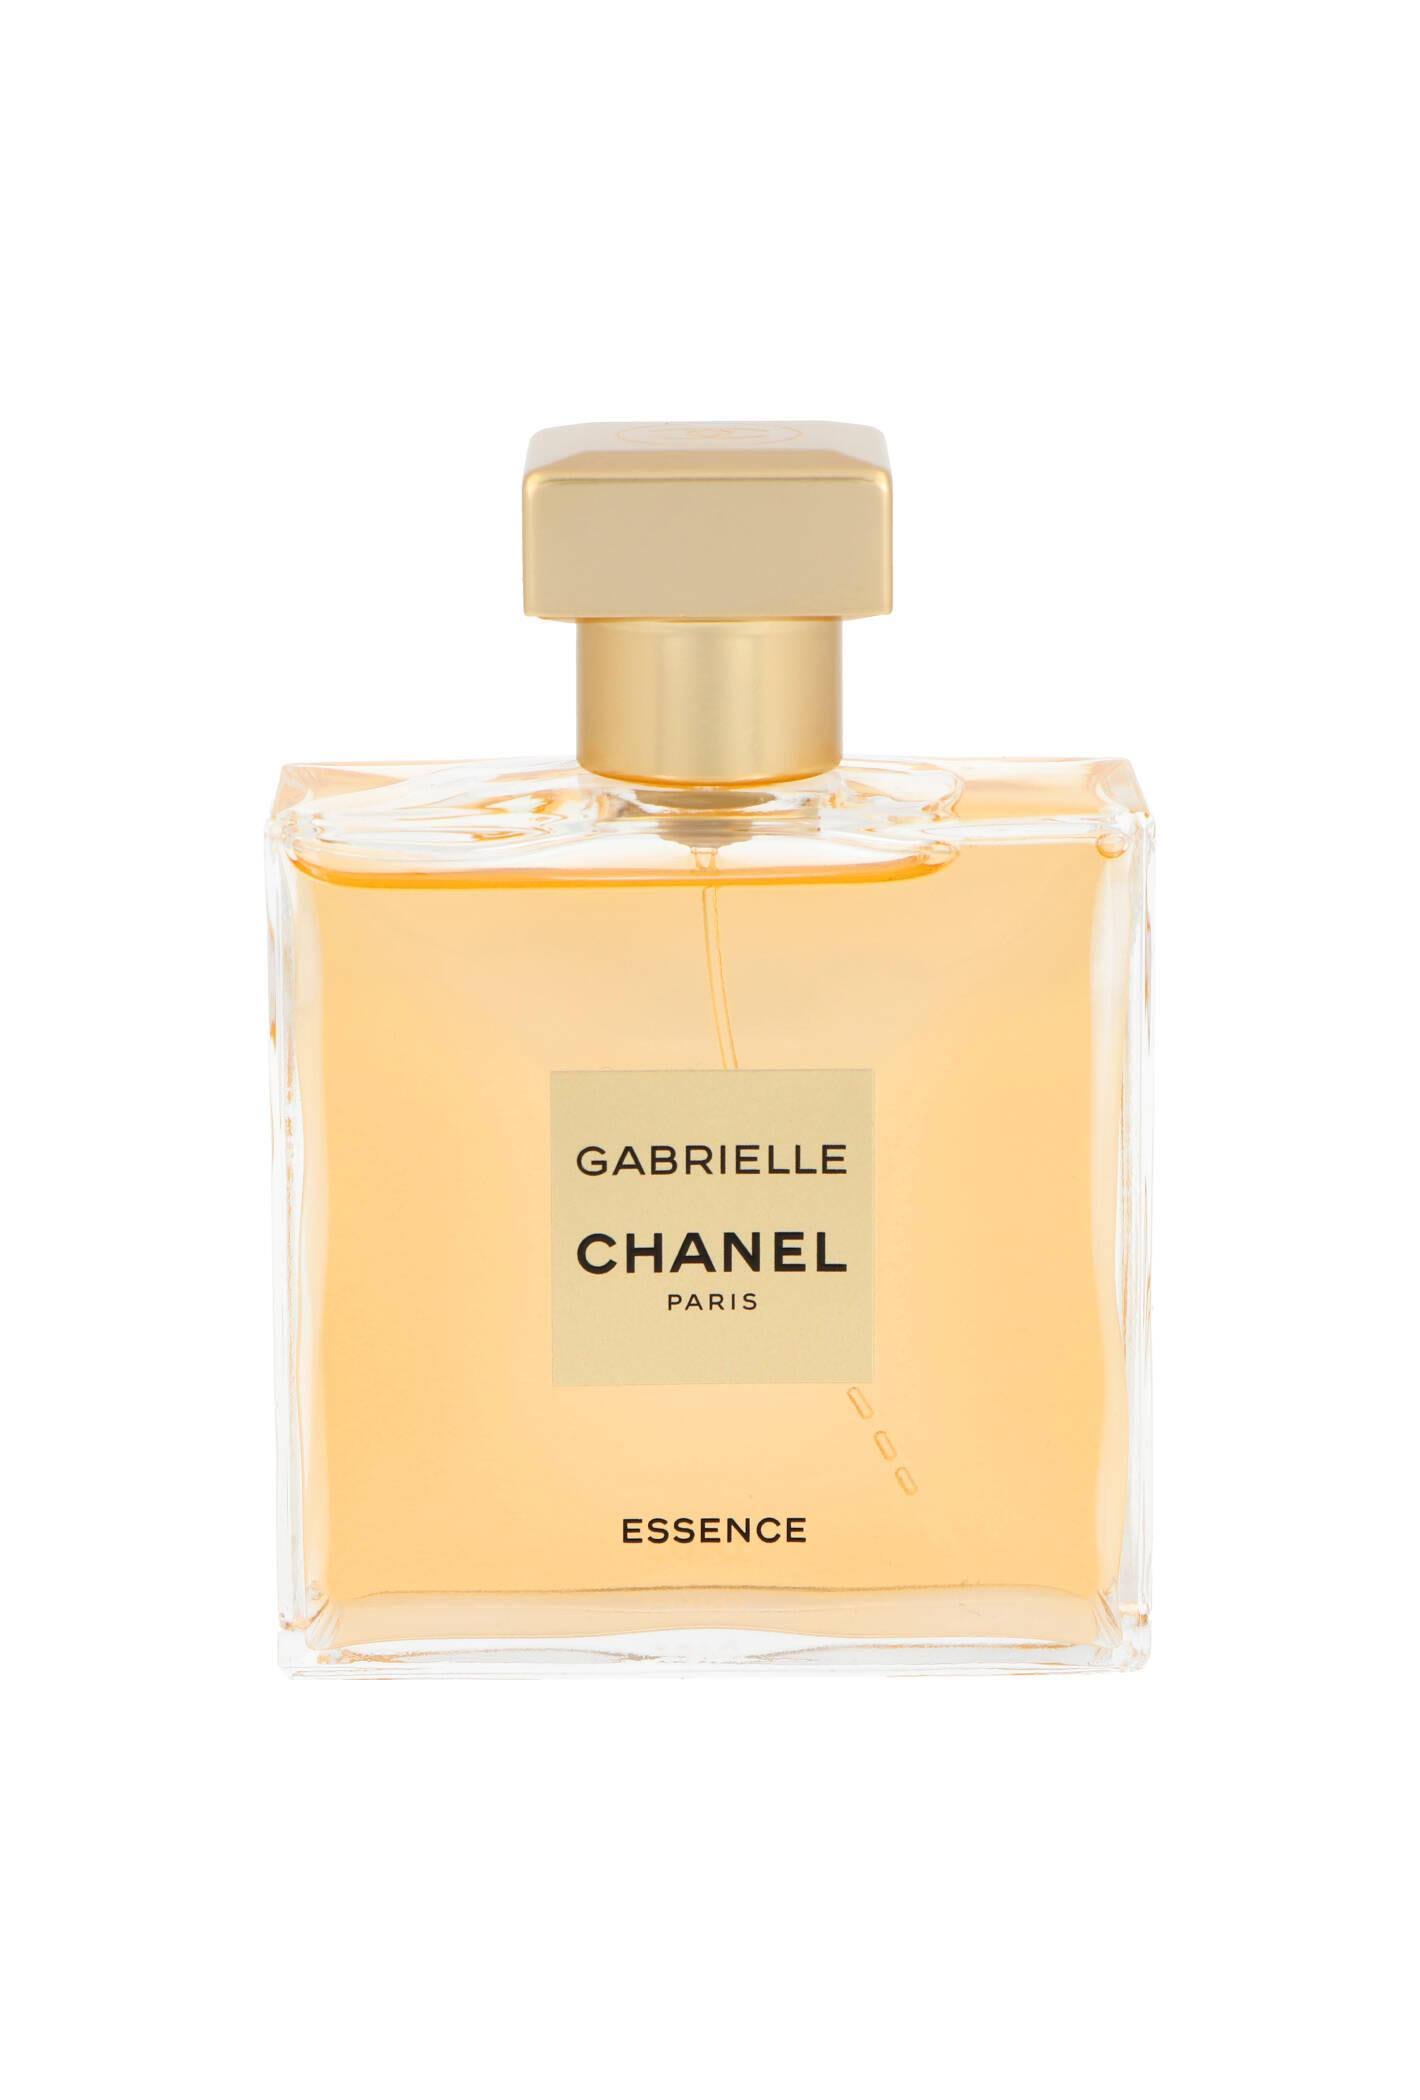 Chanel Gabrielle Essence Eau De Parfum Spray 50ml